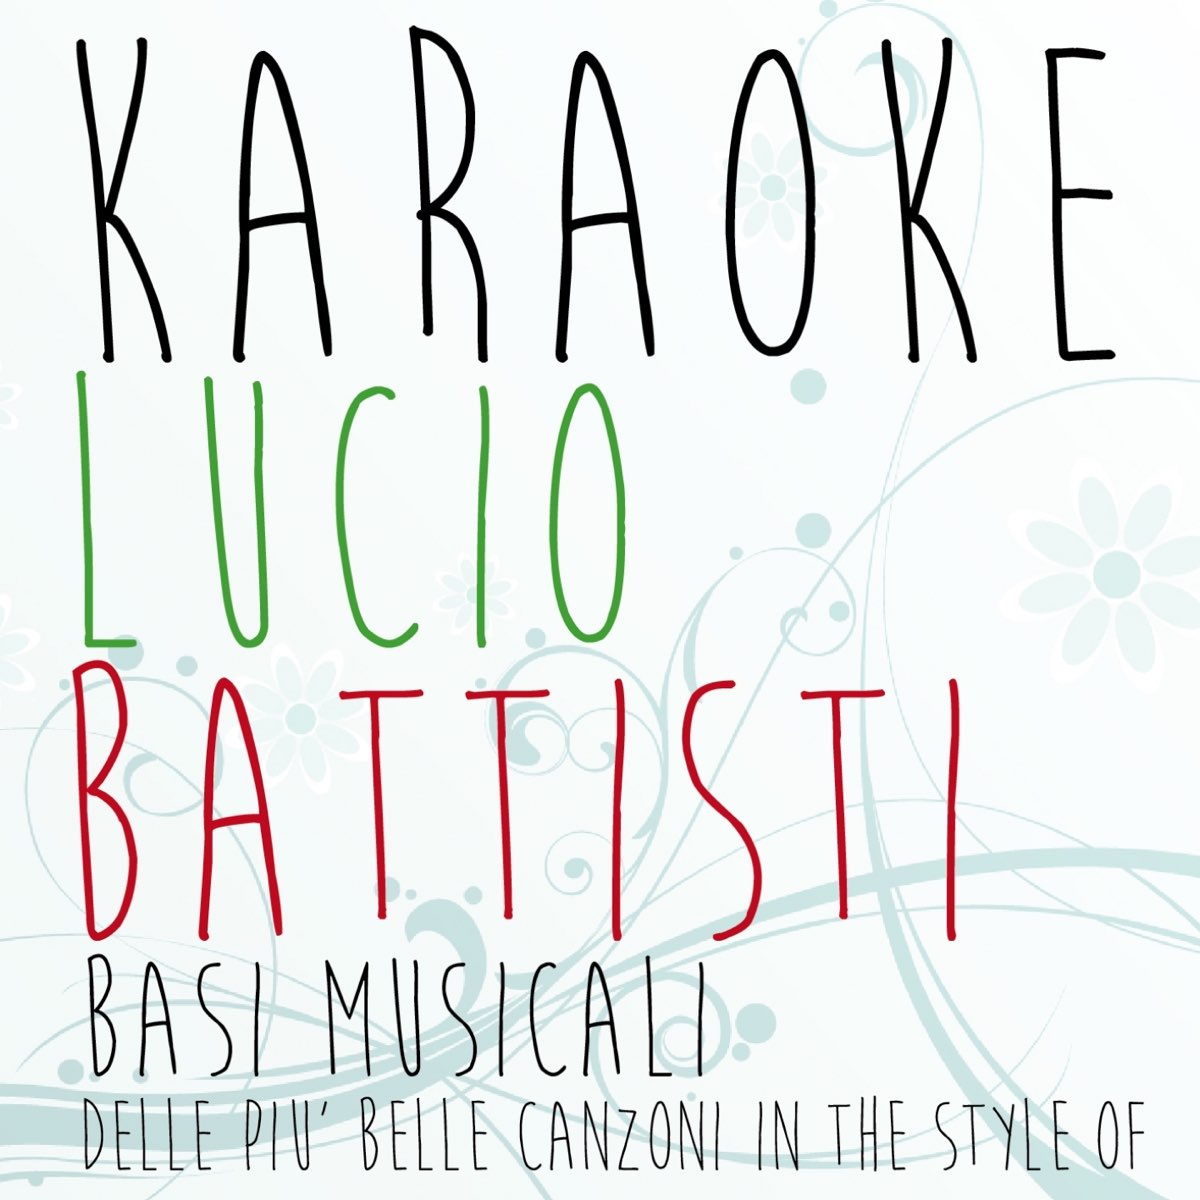 Basi karaoke delle più belle canzoni di Lucio Battisti par KaraKara sur  Apple Music